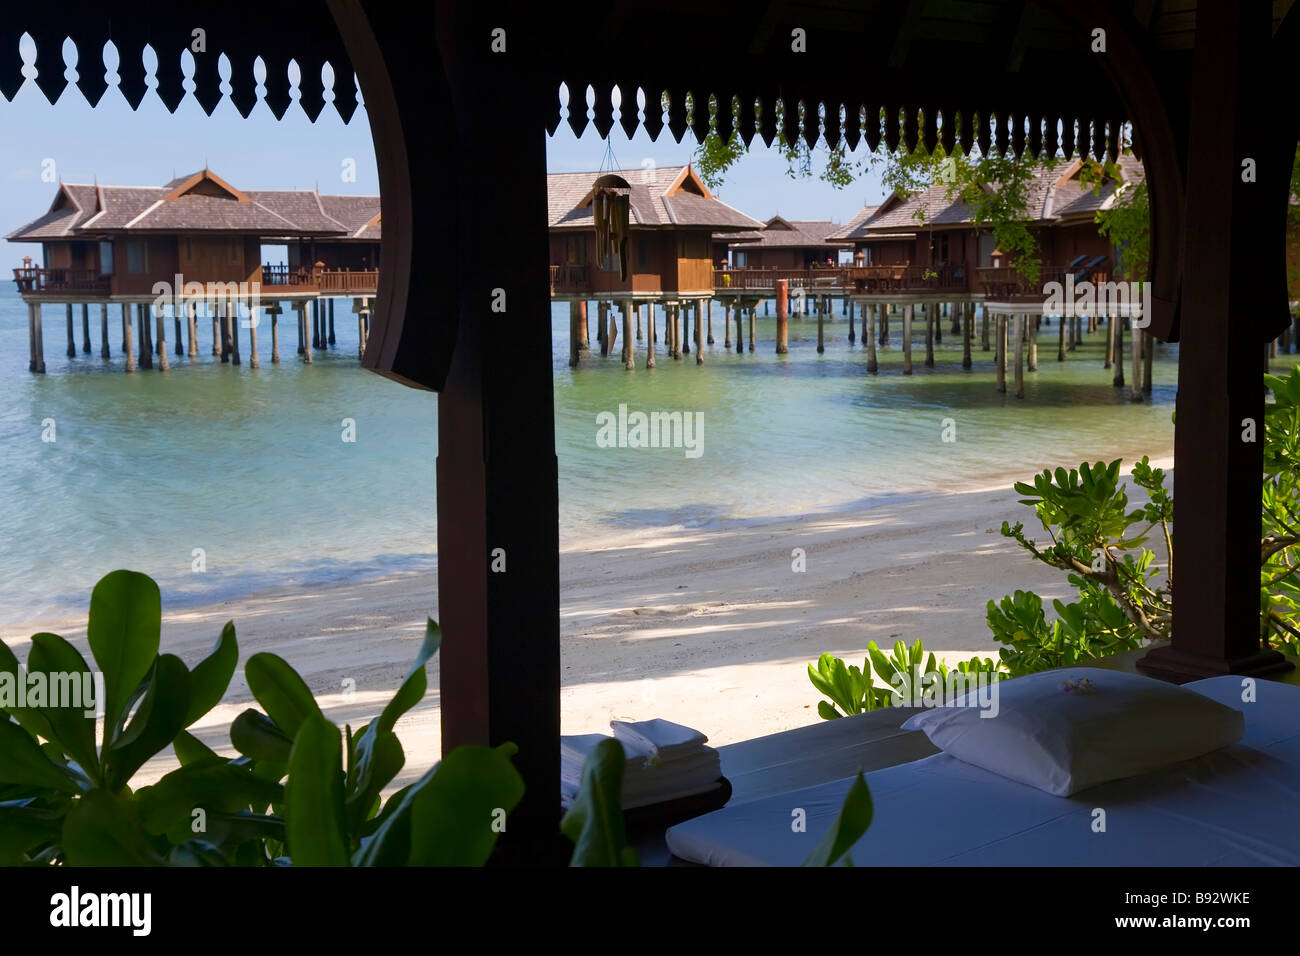 Massage-Bett, am Strand von Palau Pangkor Laut, Westküste, Malaysia Stockfoto